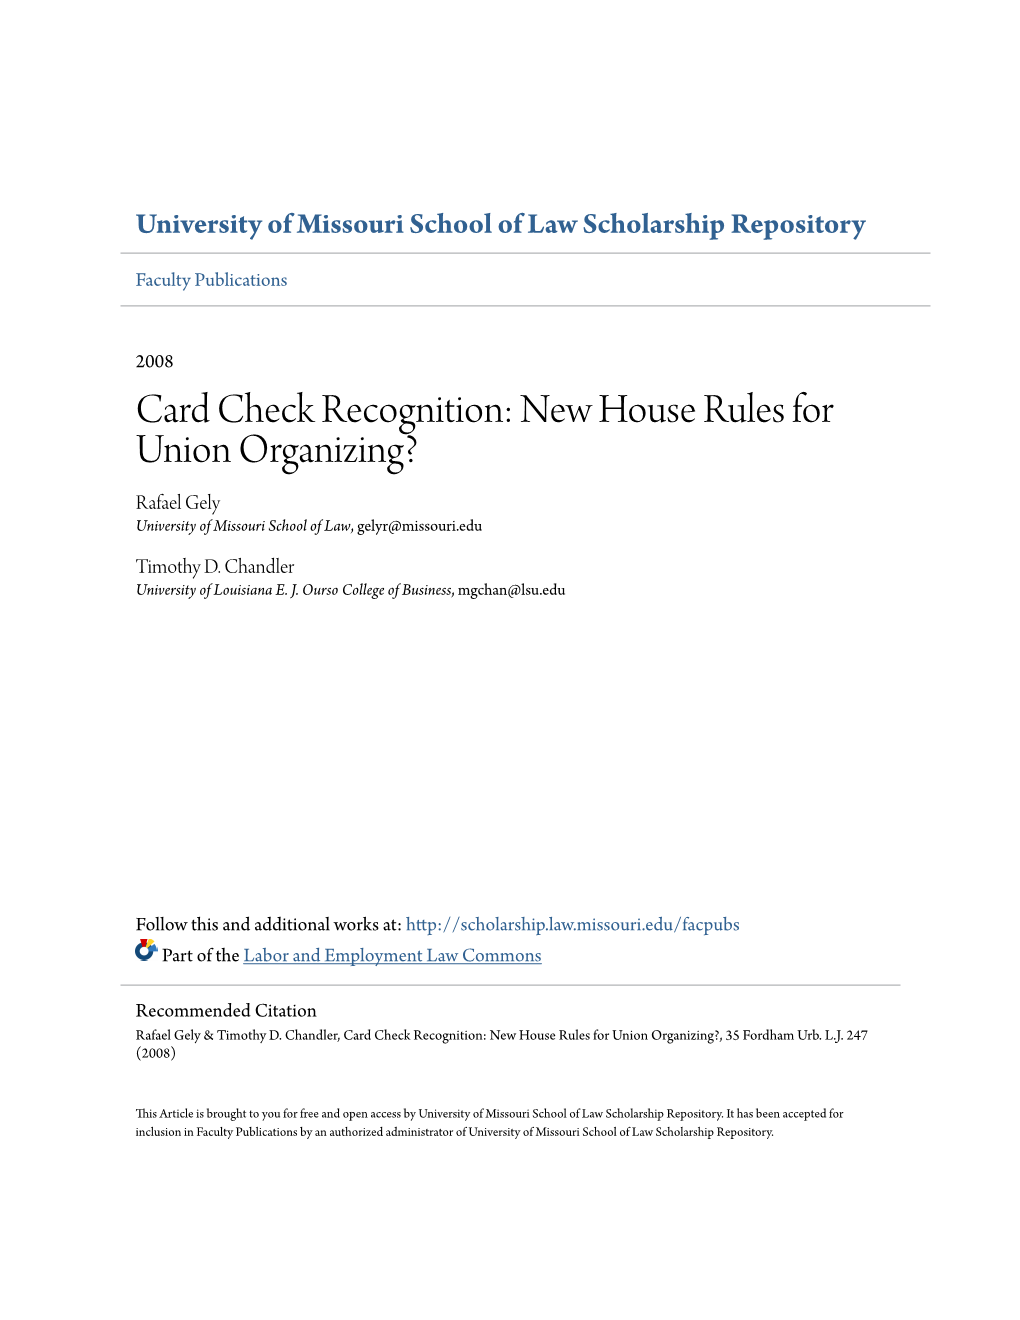 New House Rules for Union Organizing? Rafael Gely University of Missouri School of Law, Gelyr@Missouri.Edu